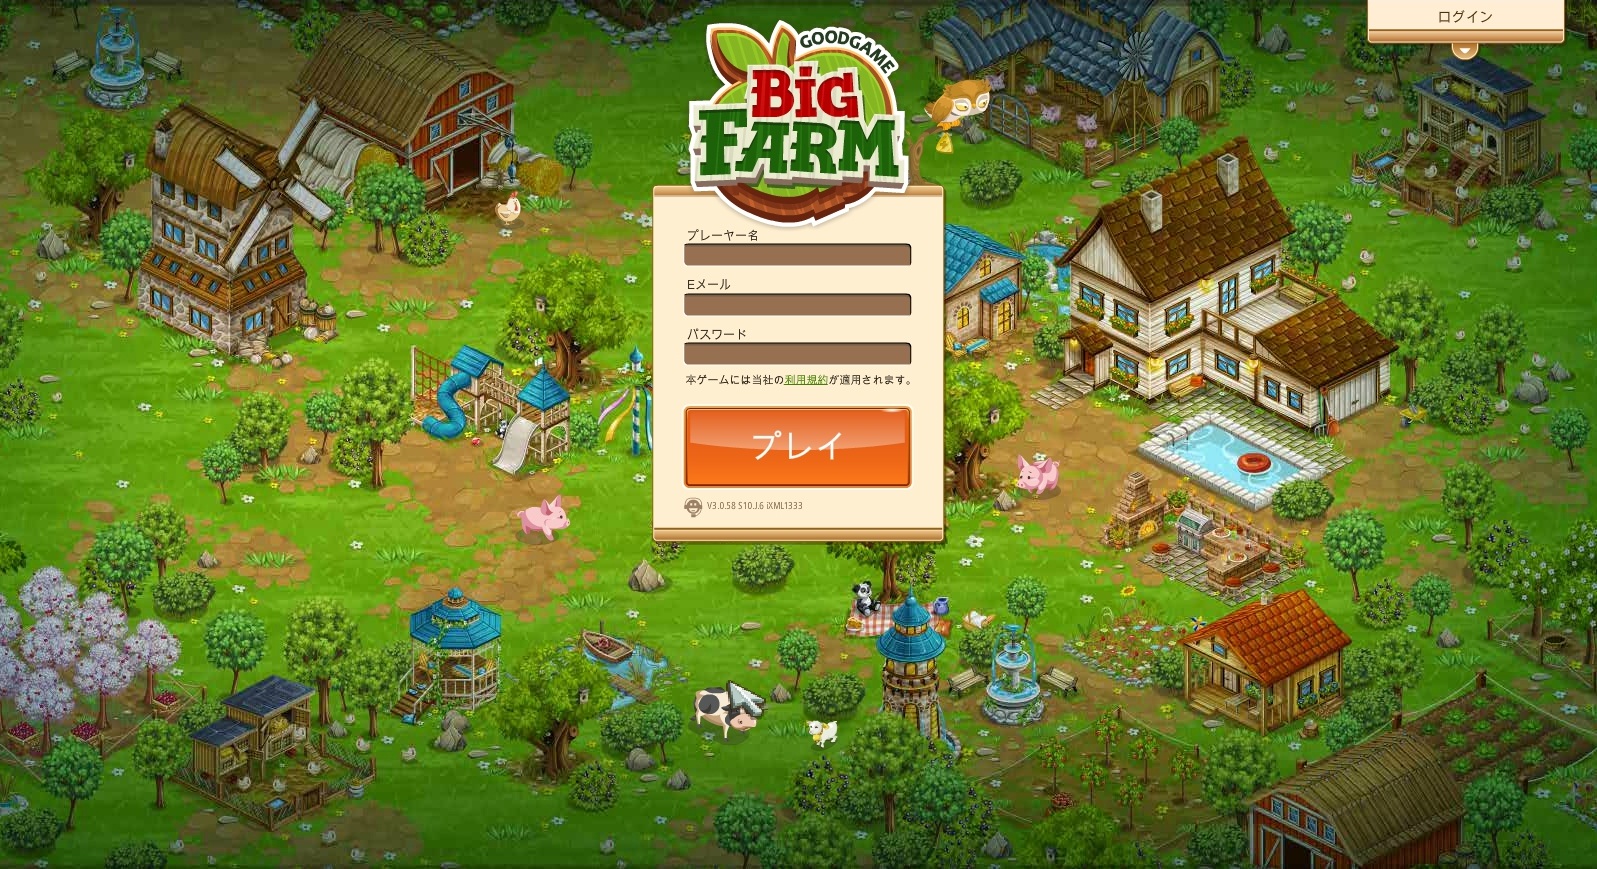 Goodgame Big Farm 頭フラッゲーム Wiki